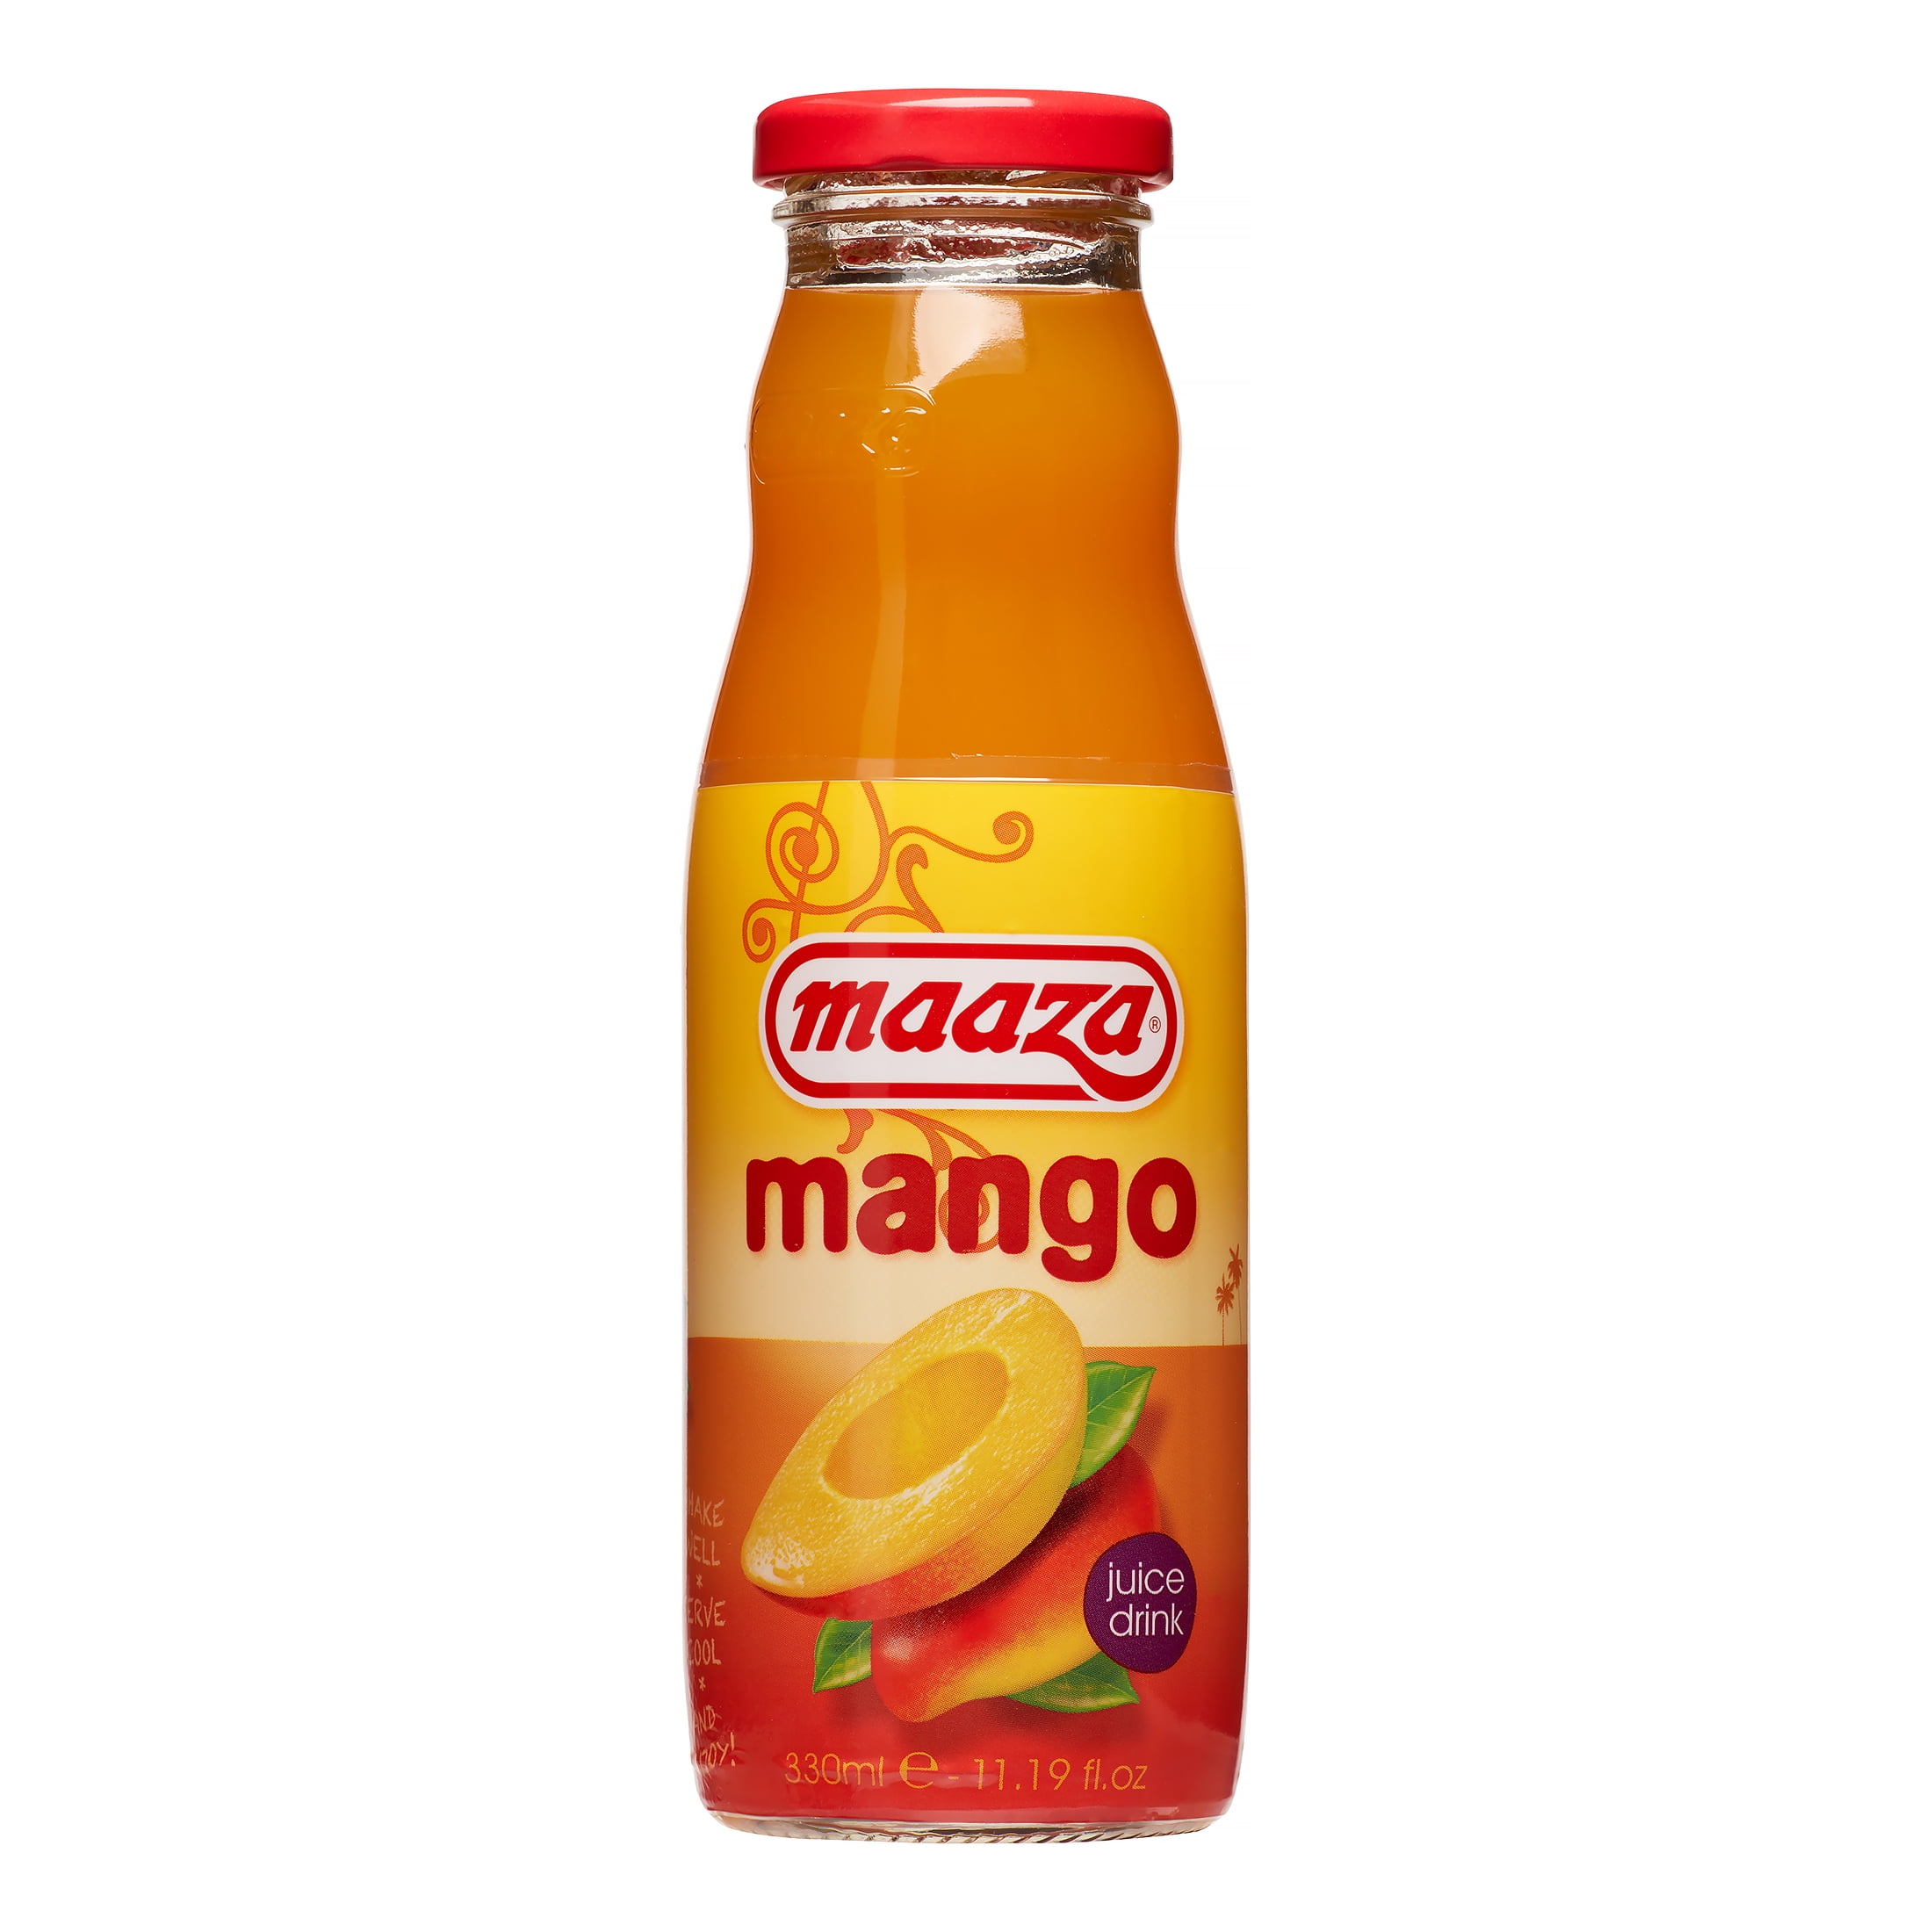 Making Mango Juice Typical Of Probolinggo City